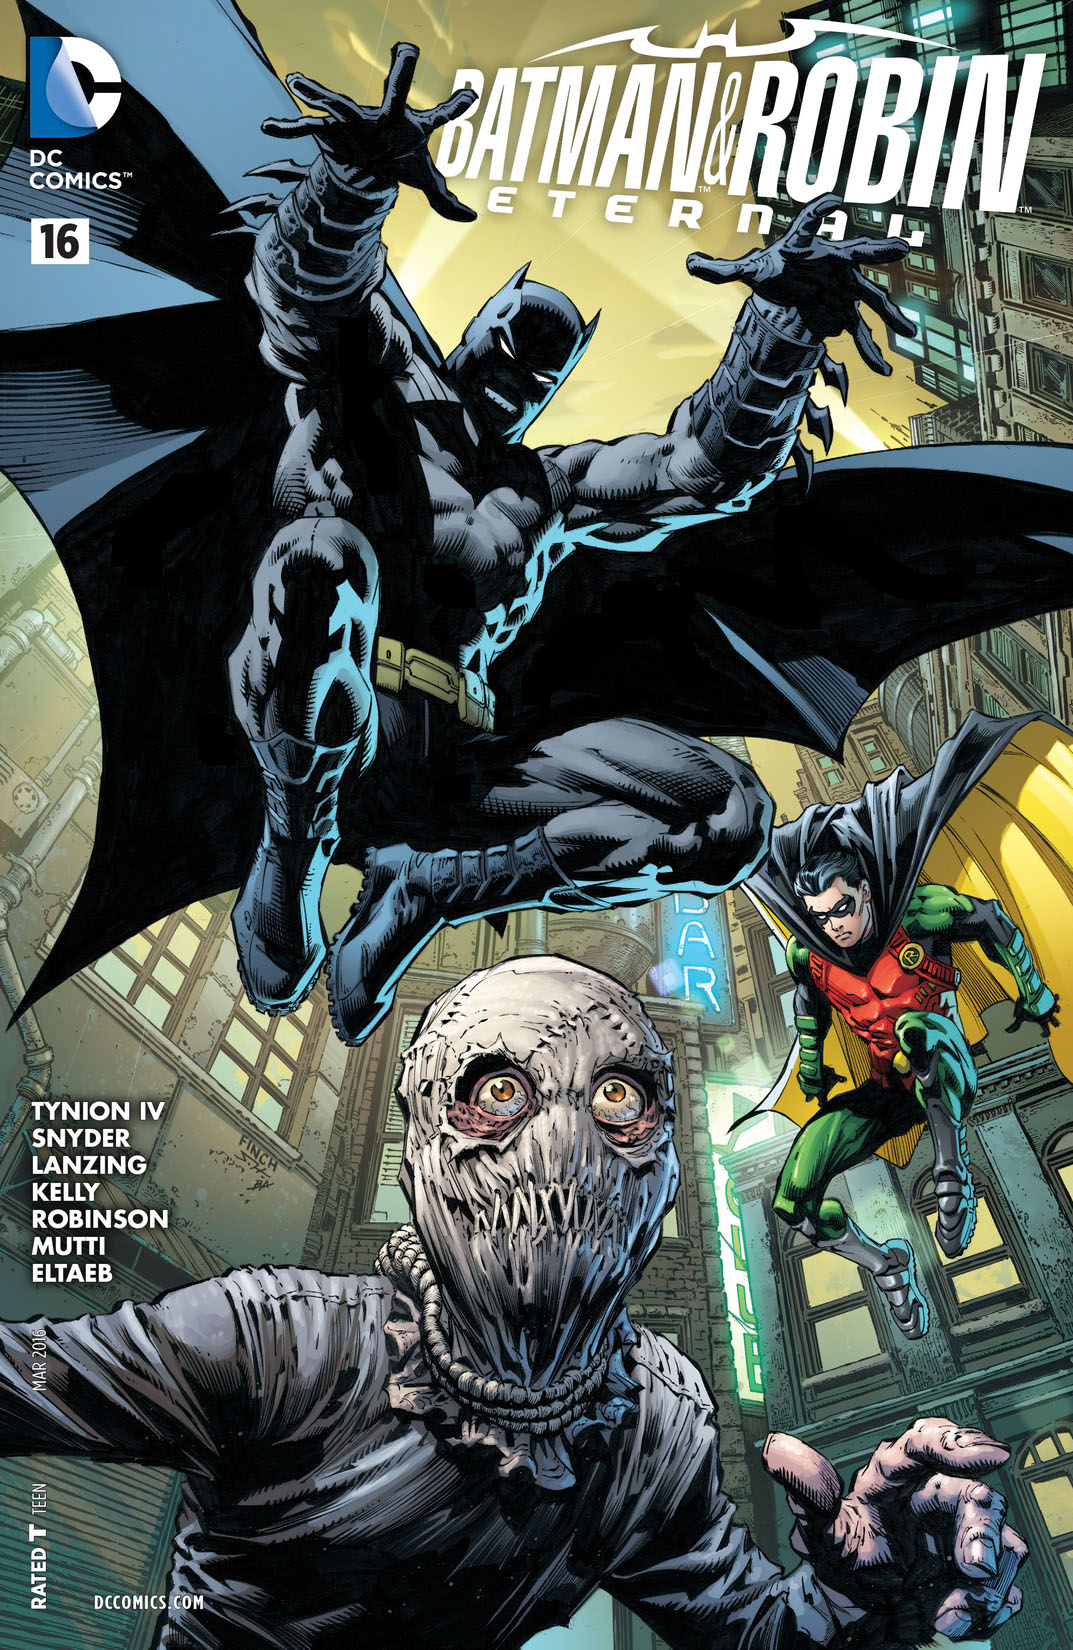 Batman & Robin Eternal #16 preview images